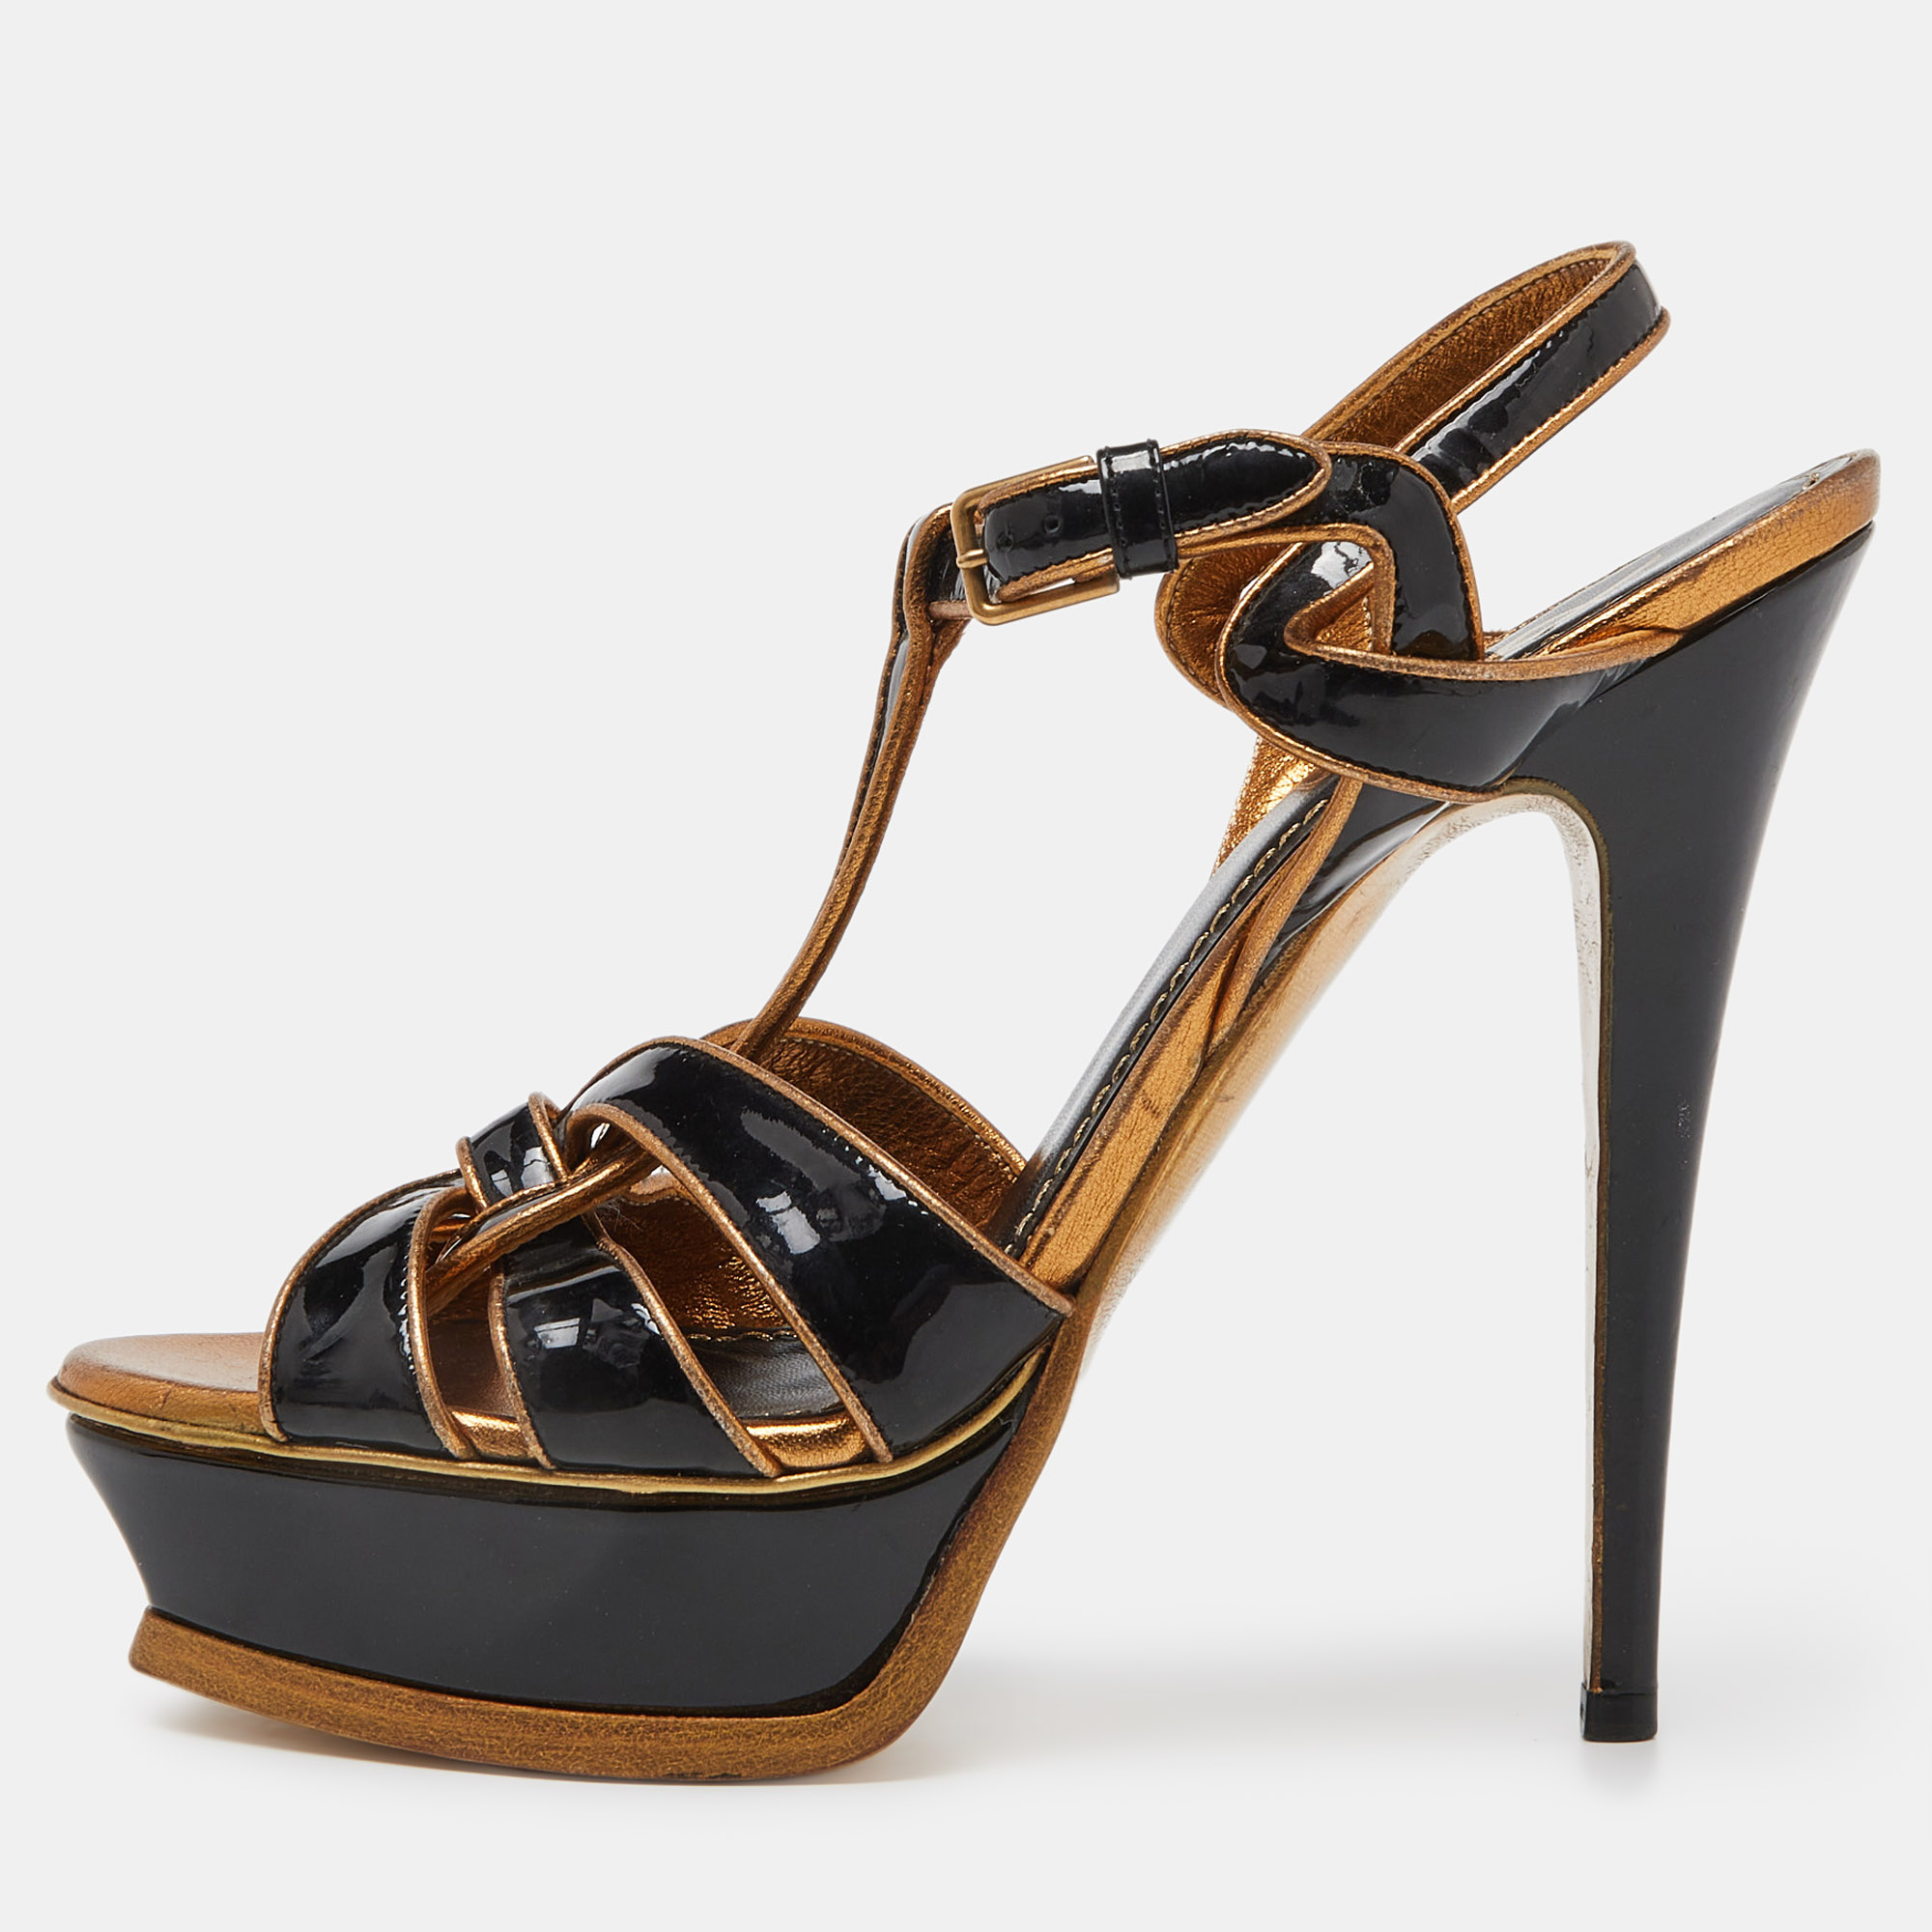 Yves saint laurent black/gold patent leather tribute platform ankle strap sandals size 39